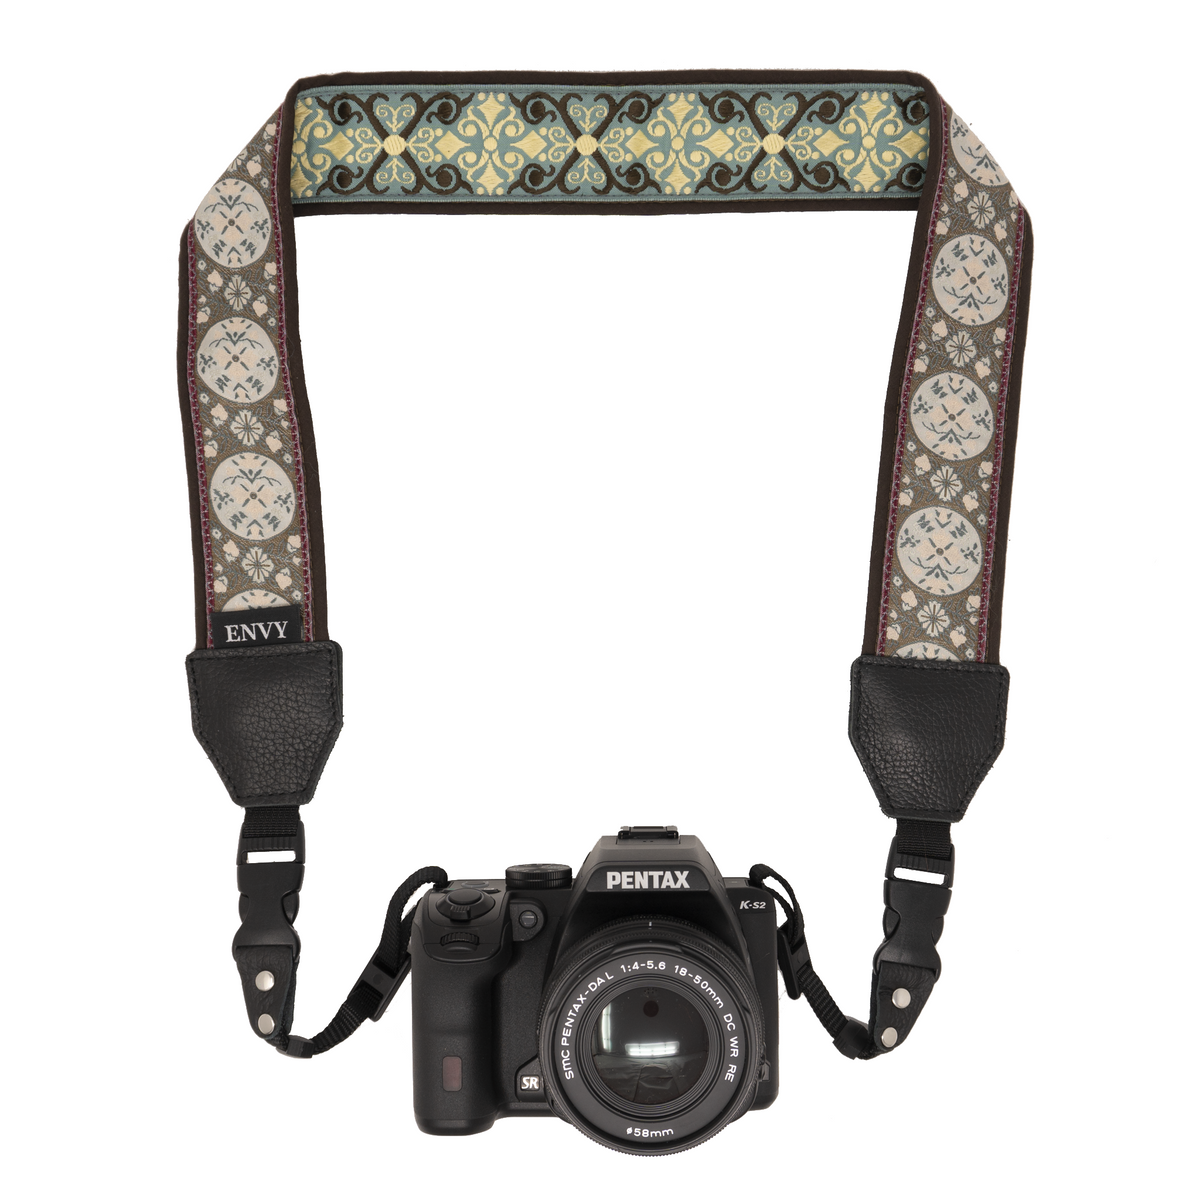 My Fave Camera Neck Strap - Reversible Camera Strap, Decorative Camera Strap - Pattern: At Peace, Color: Brown